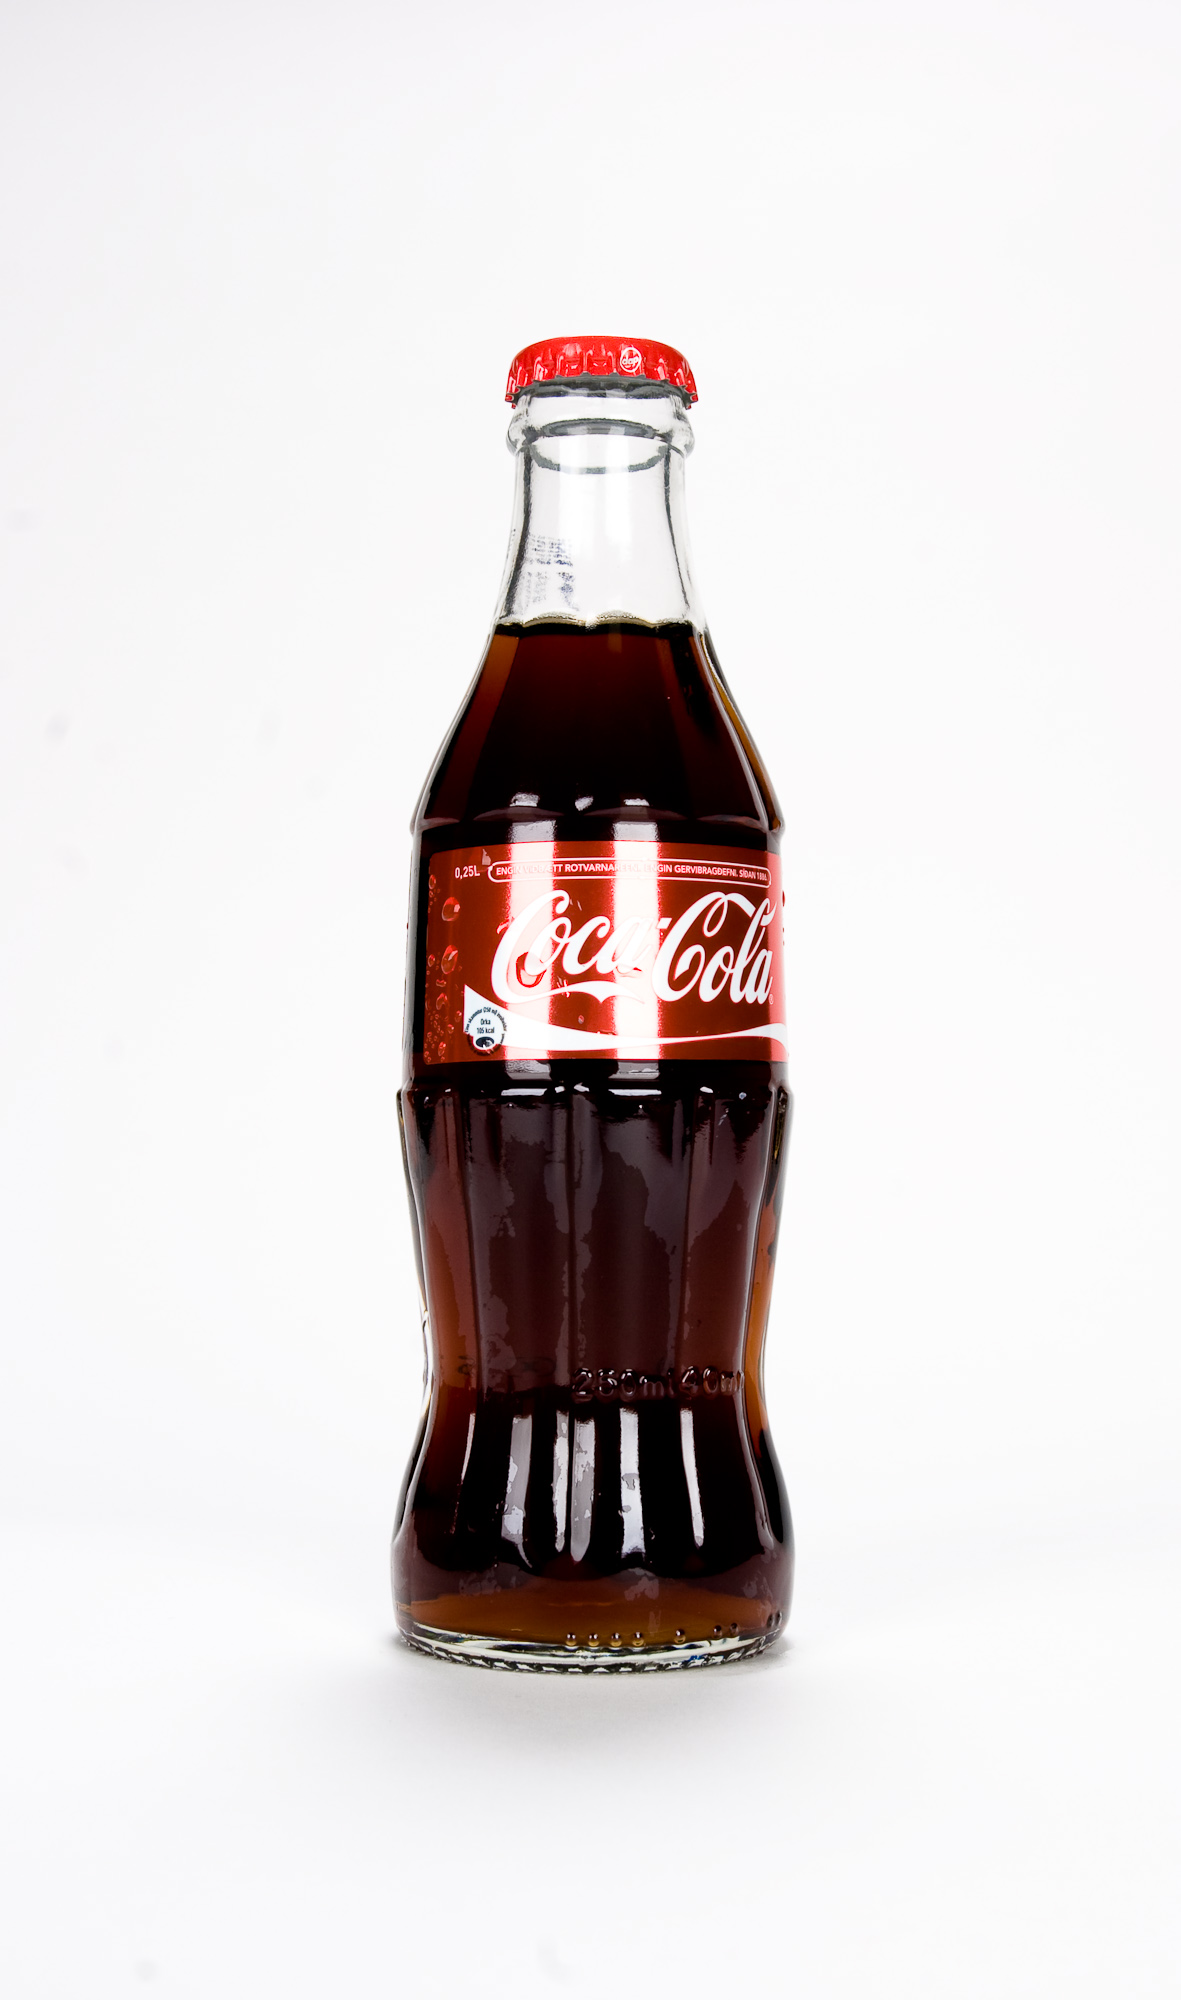 Coca cola bottle photo